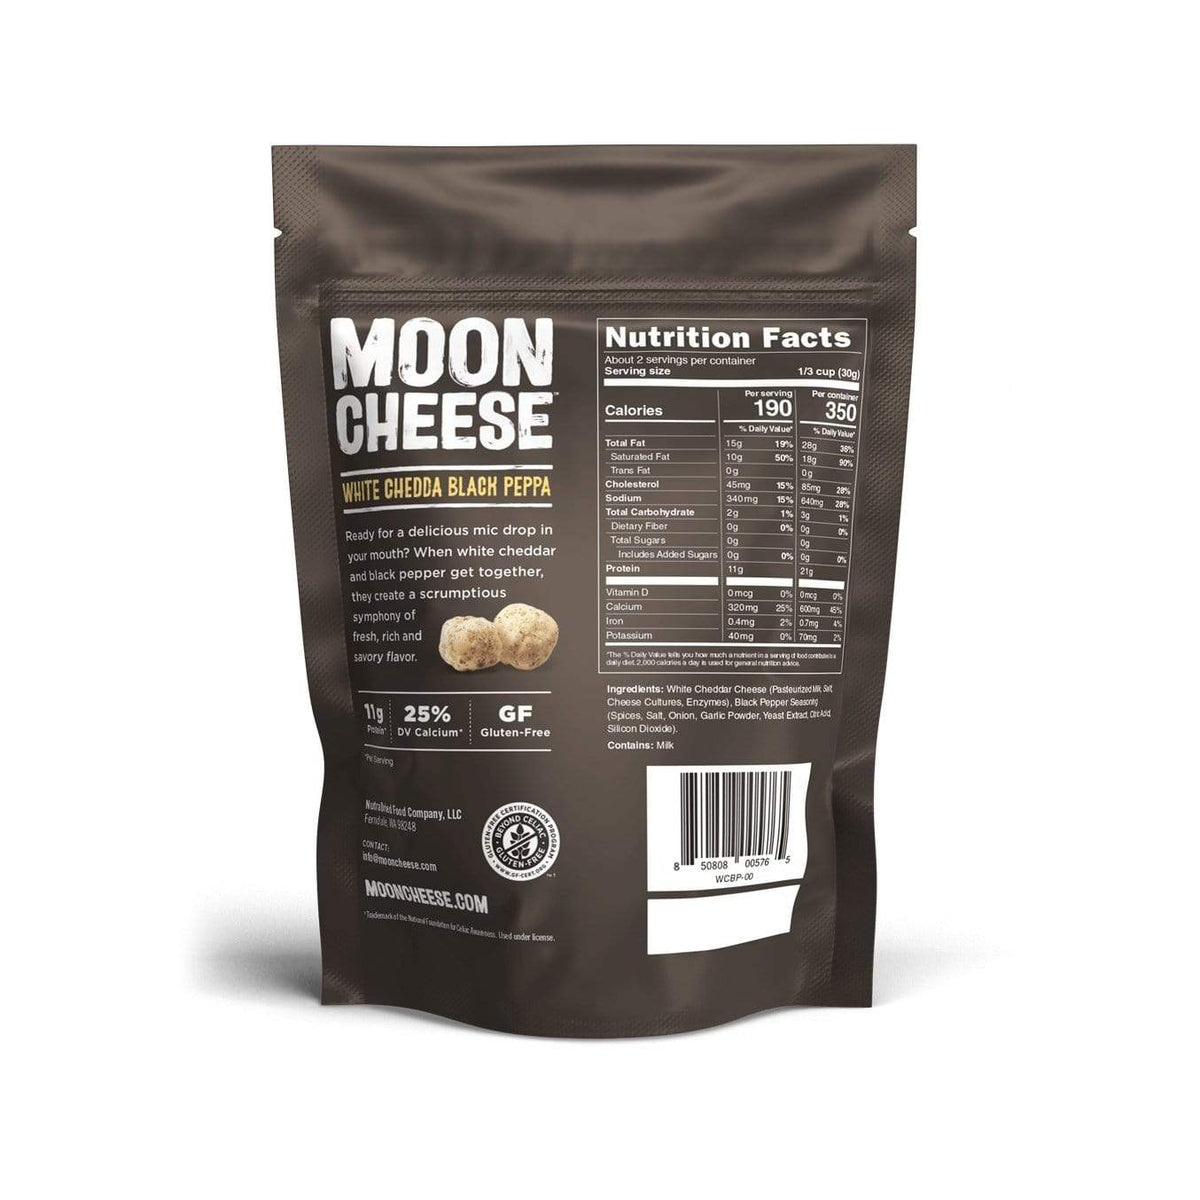 [Moon Cheese] White Chedda Black Peppa I 1oz or 2 oz bags exclusive at